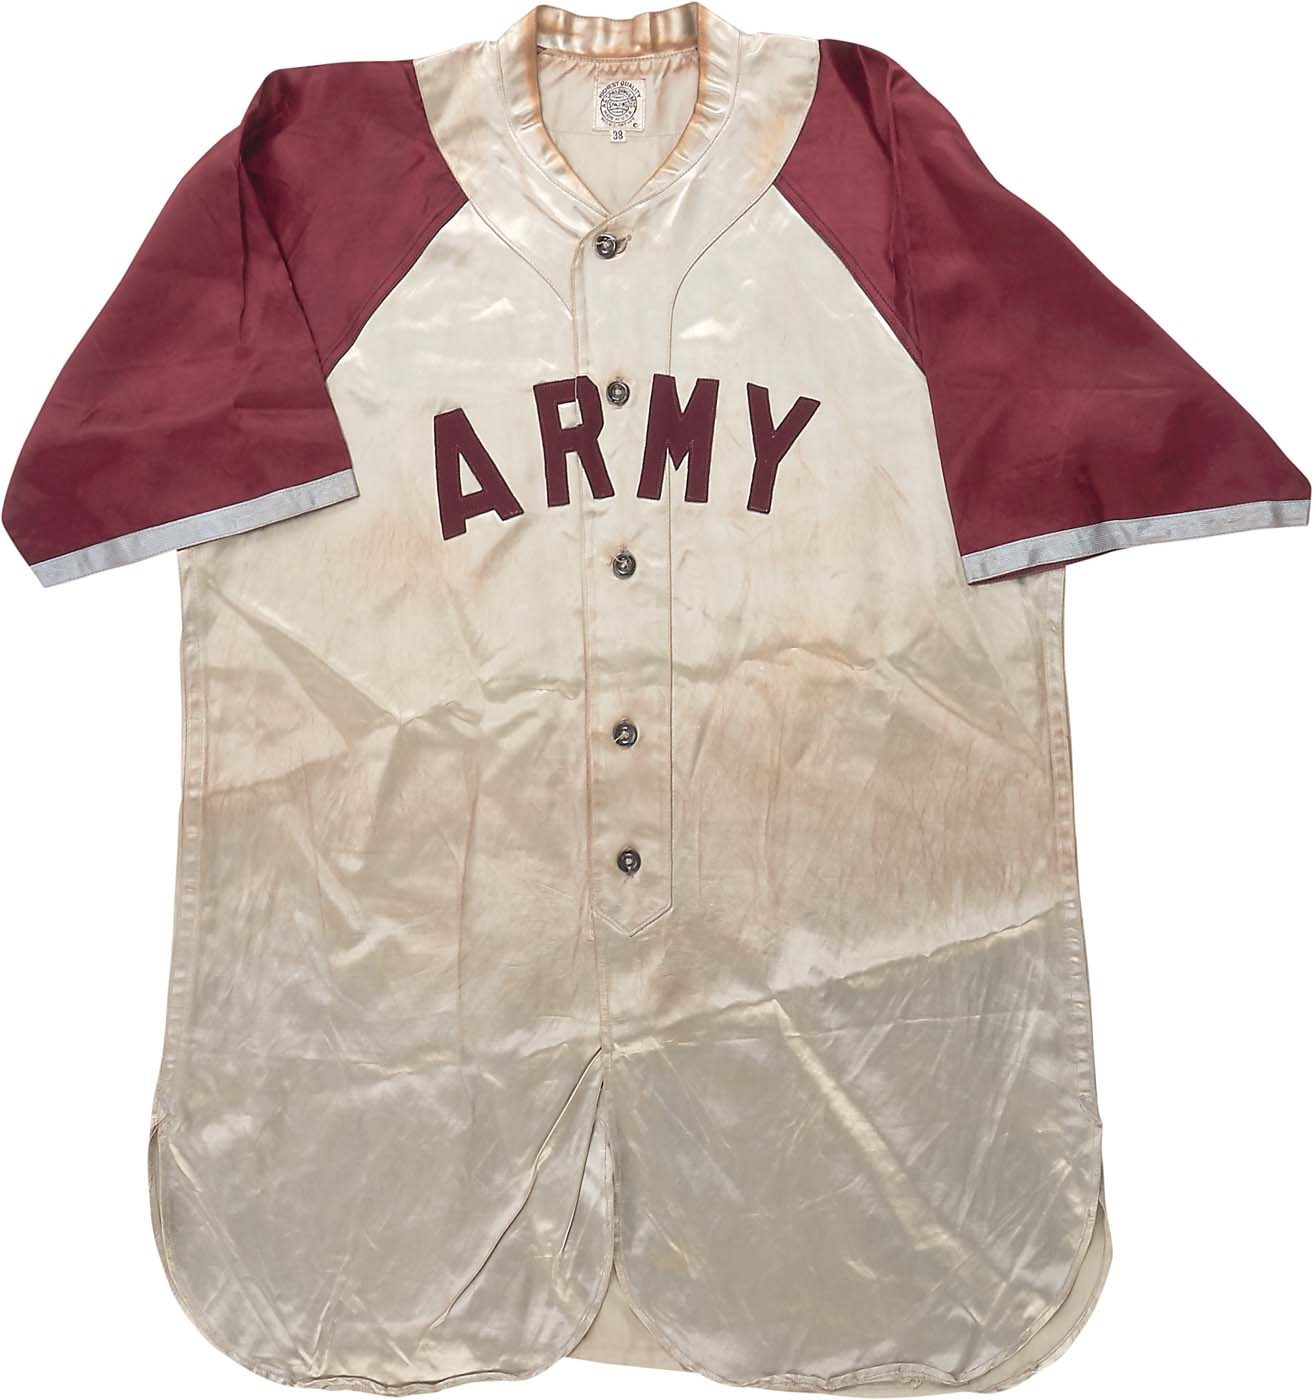 Baseball Equipment - 1940s U.S. Army "Night Game" Satin Baseball Jersey & Cap